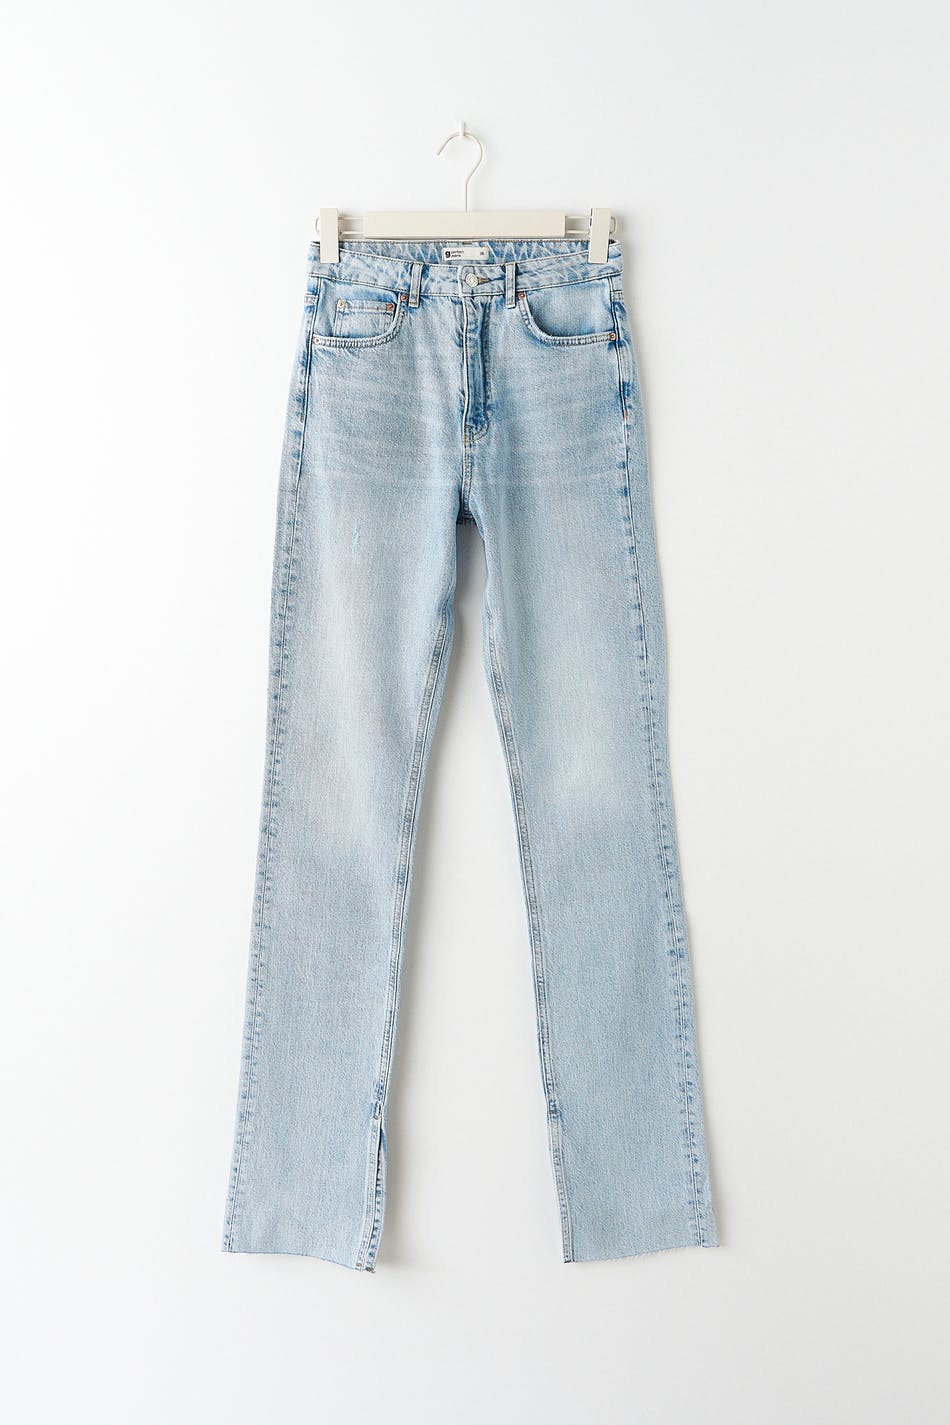 High waist tall slit jeans, Gina Tricot